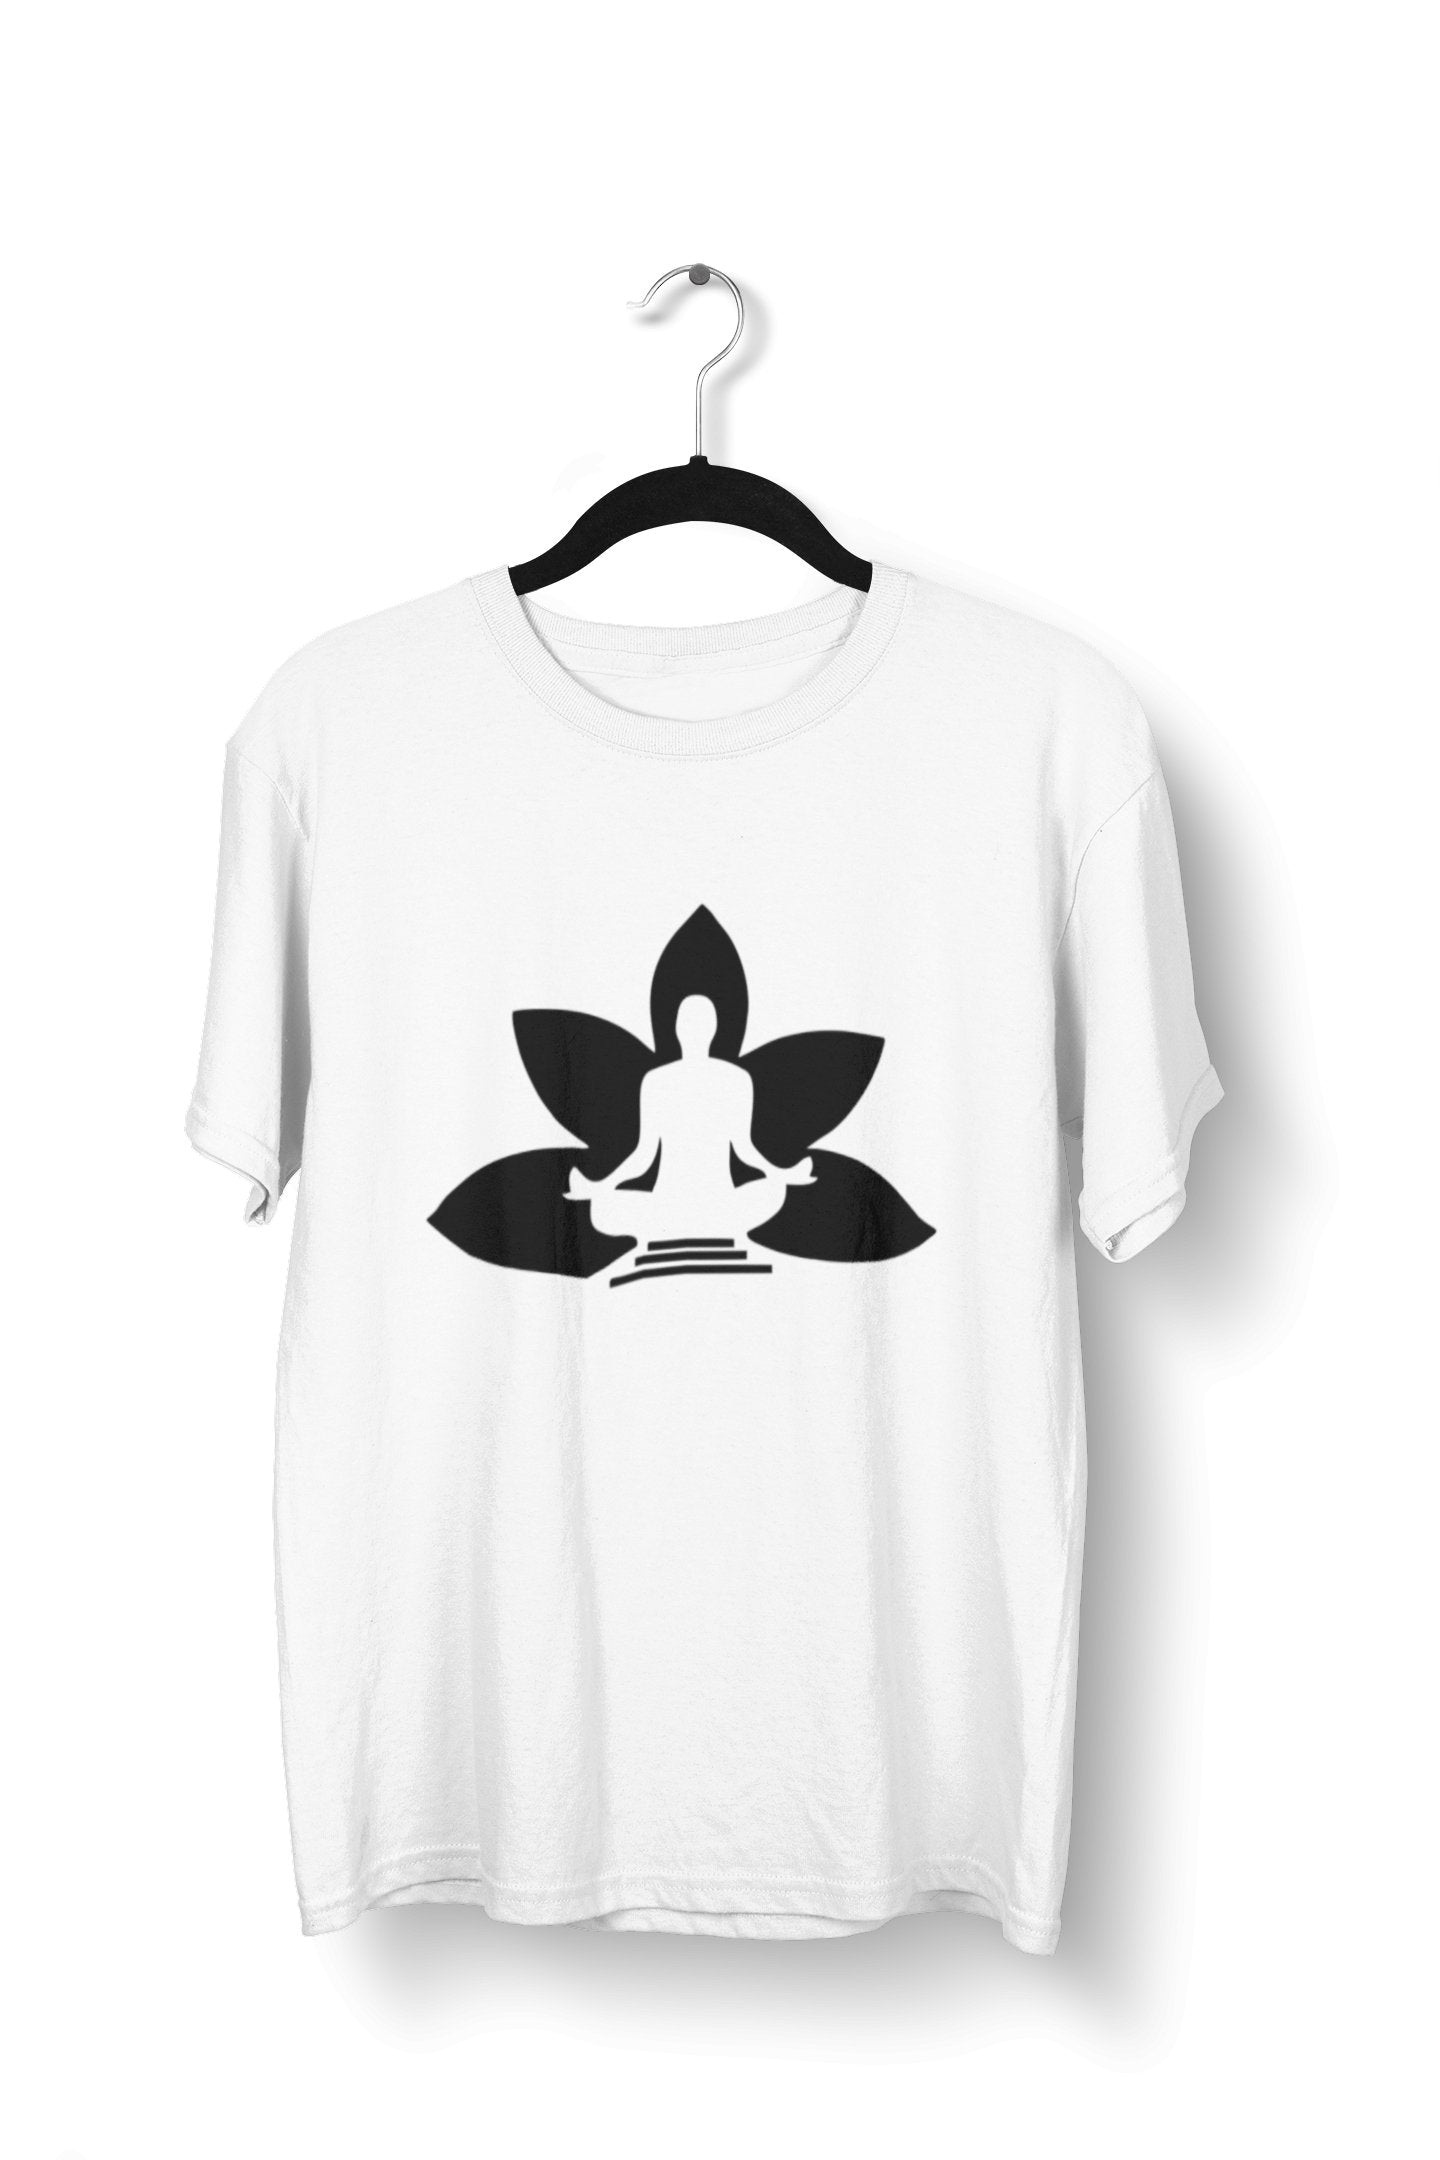 thelegalgang,Meditation Printed Yoga T-Shirt,.